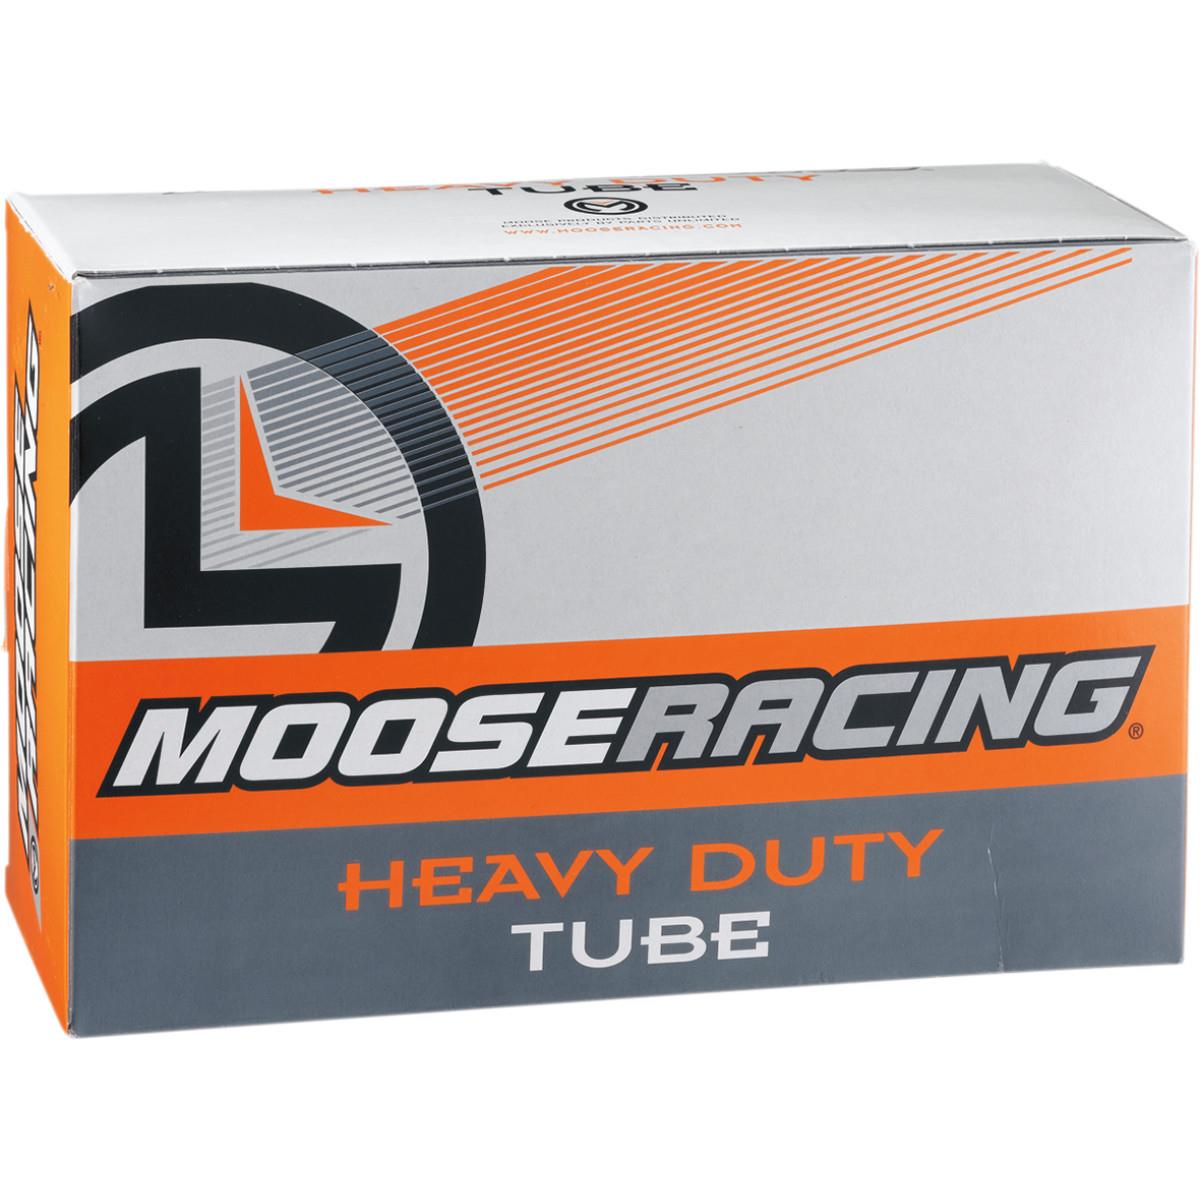 Moose Racing Tube Heavy Duty 2.50/2.75-10